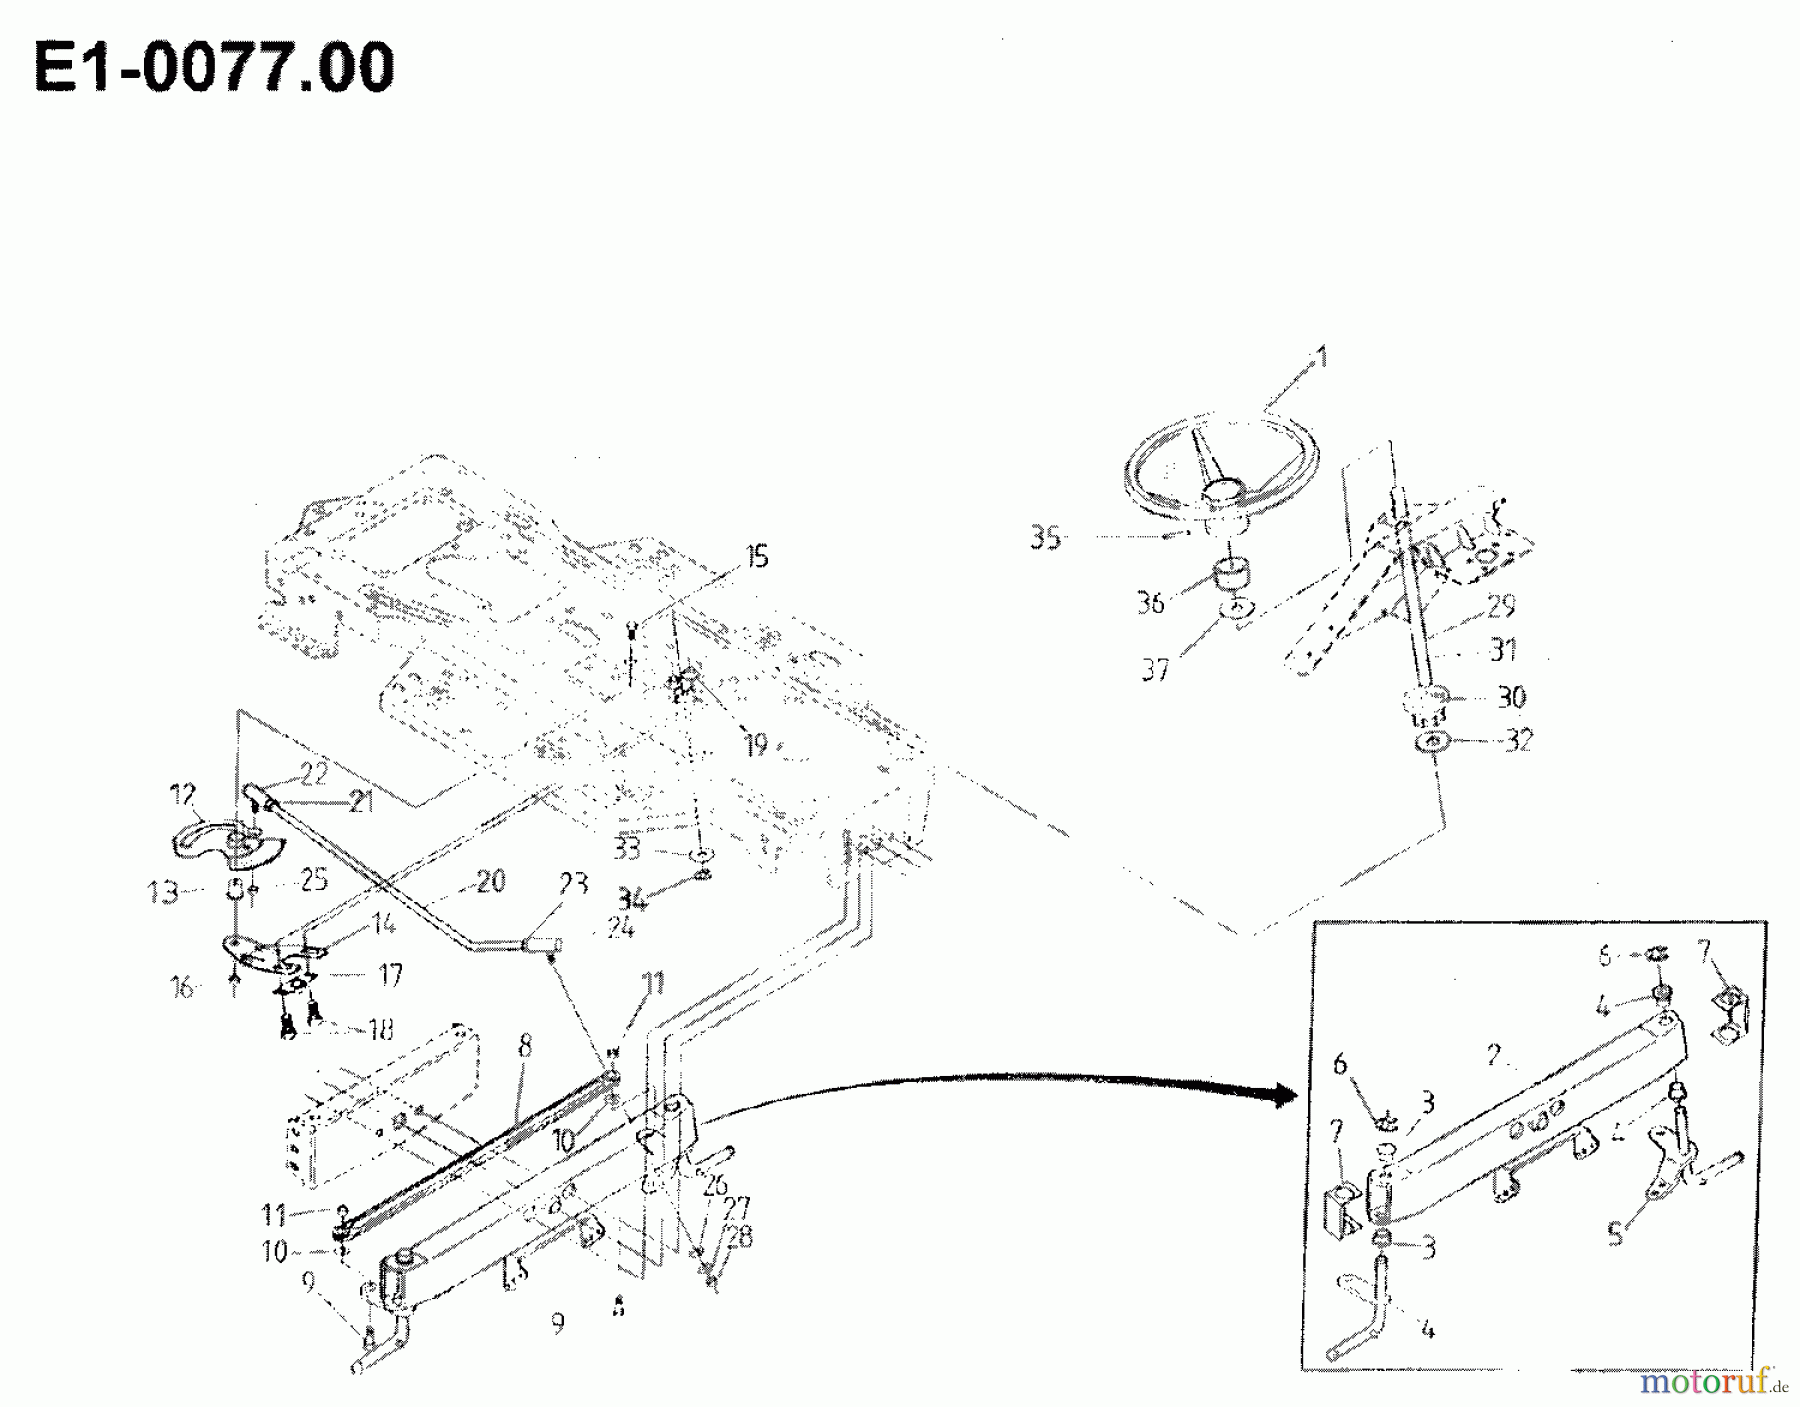  Gutbrod Tracteurs de pelouse 1114 AWS 00097.01  (1992) Axe avant